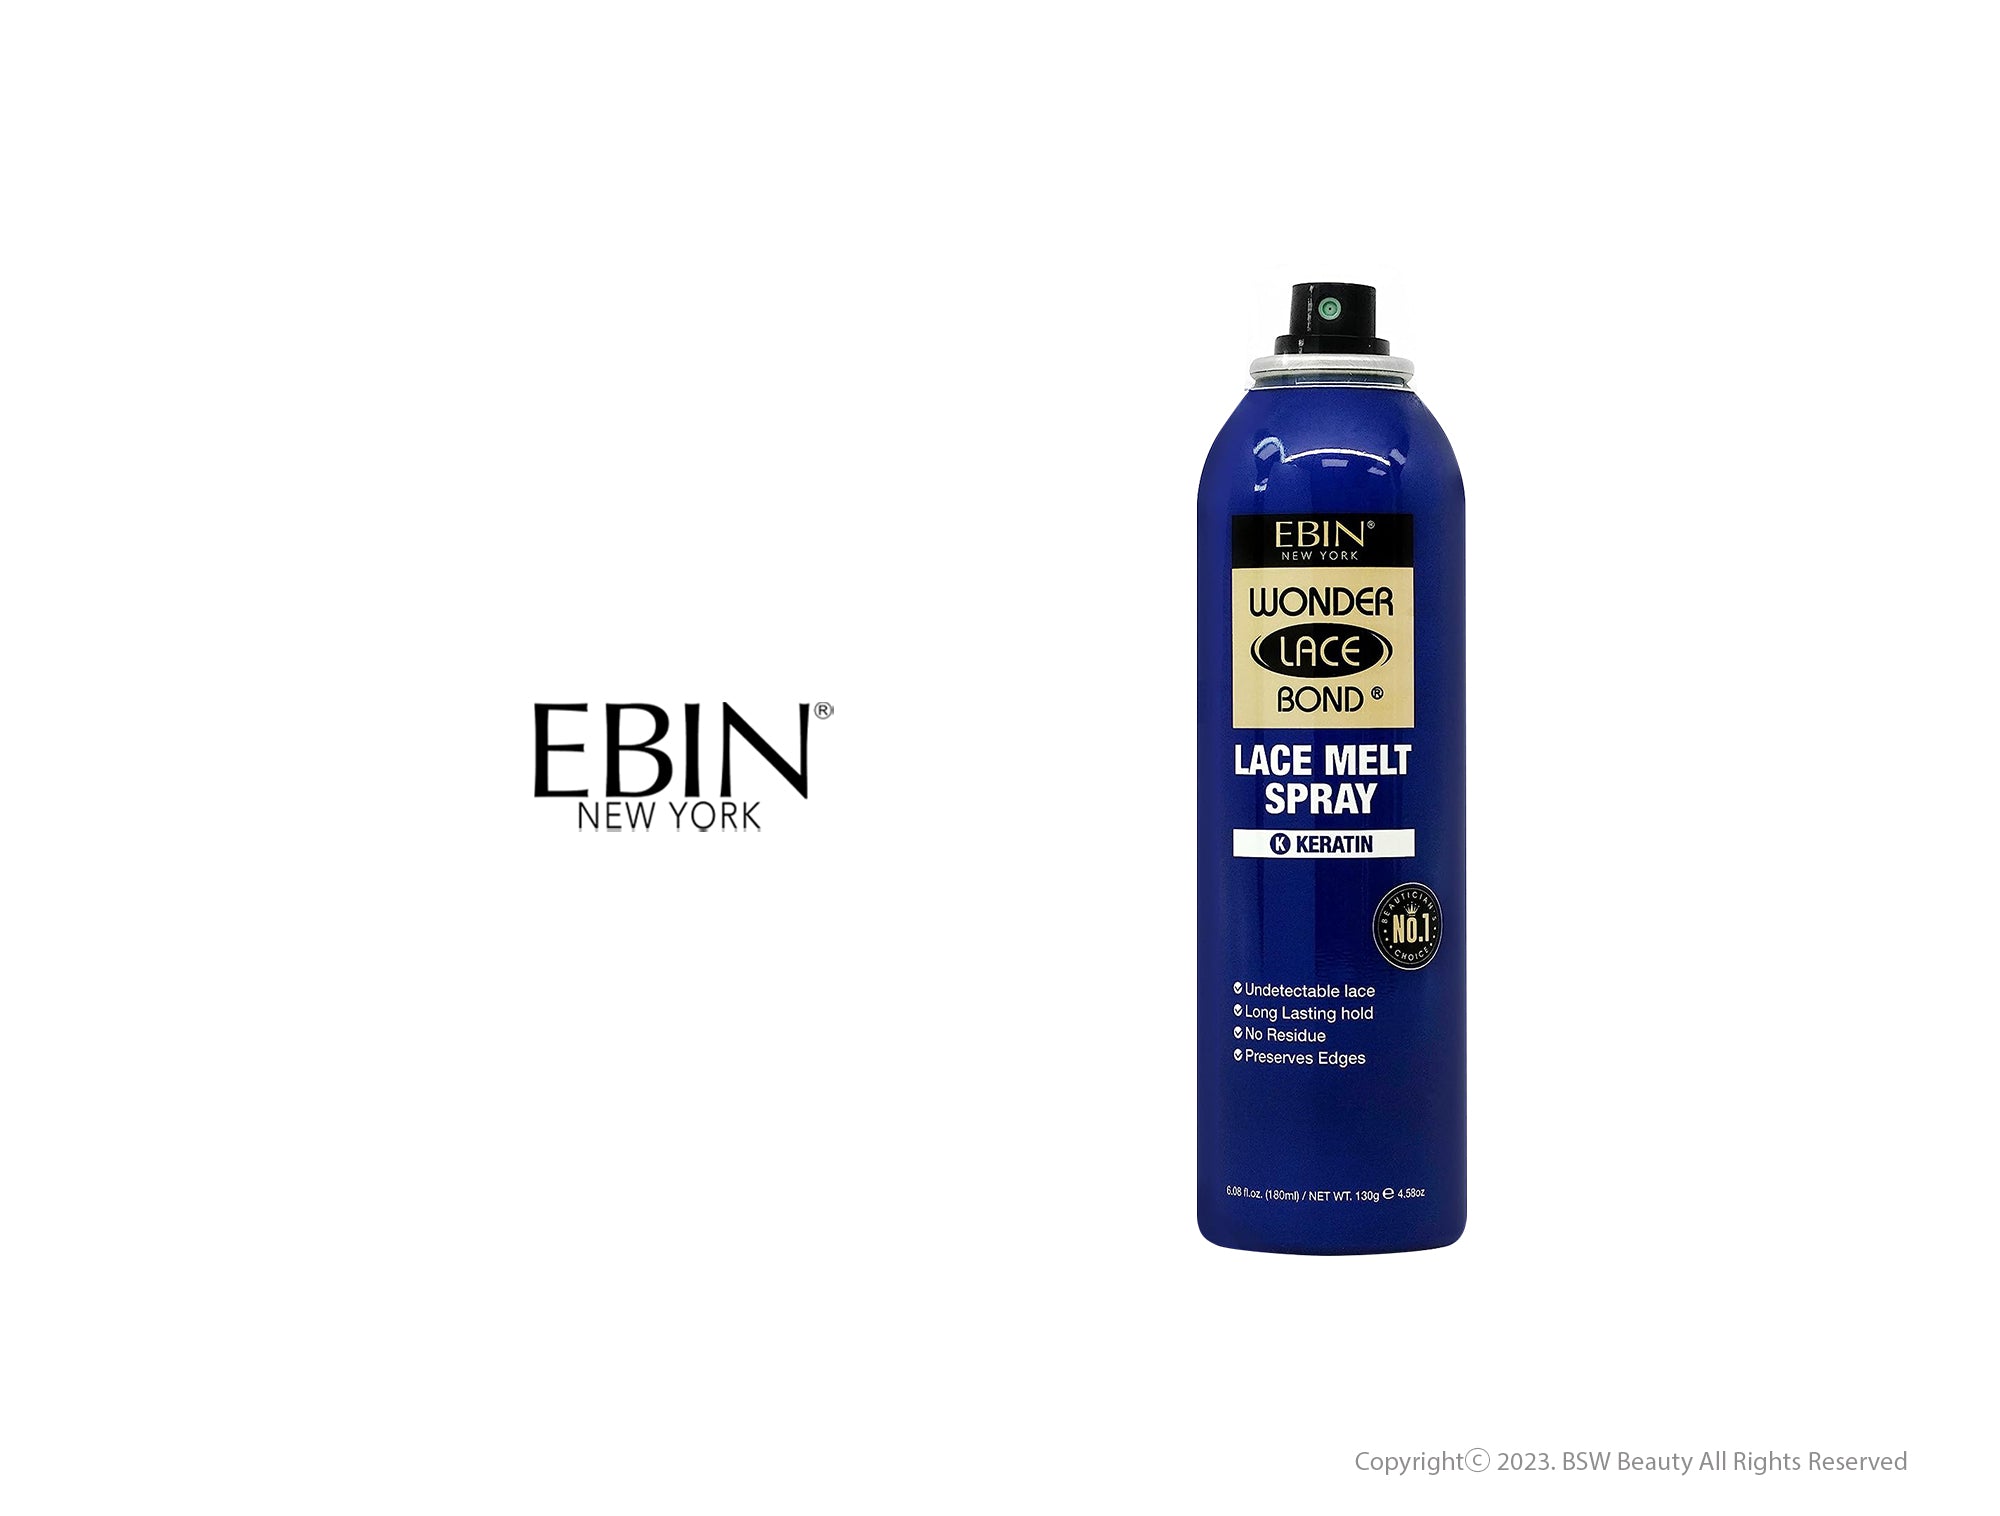 Ebin - Wonder Bond Melting Spray - Extreme Firm Hold (Supreme) 8oz